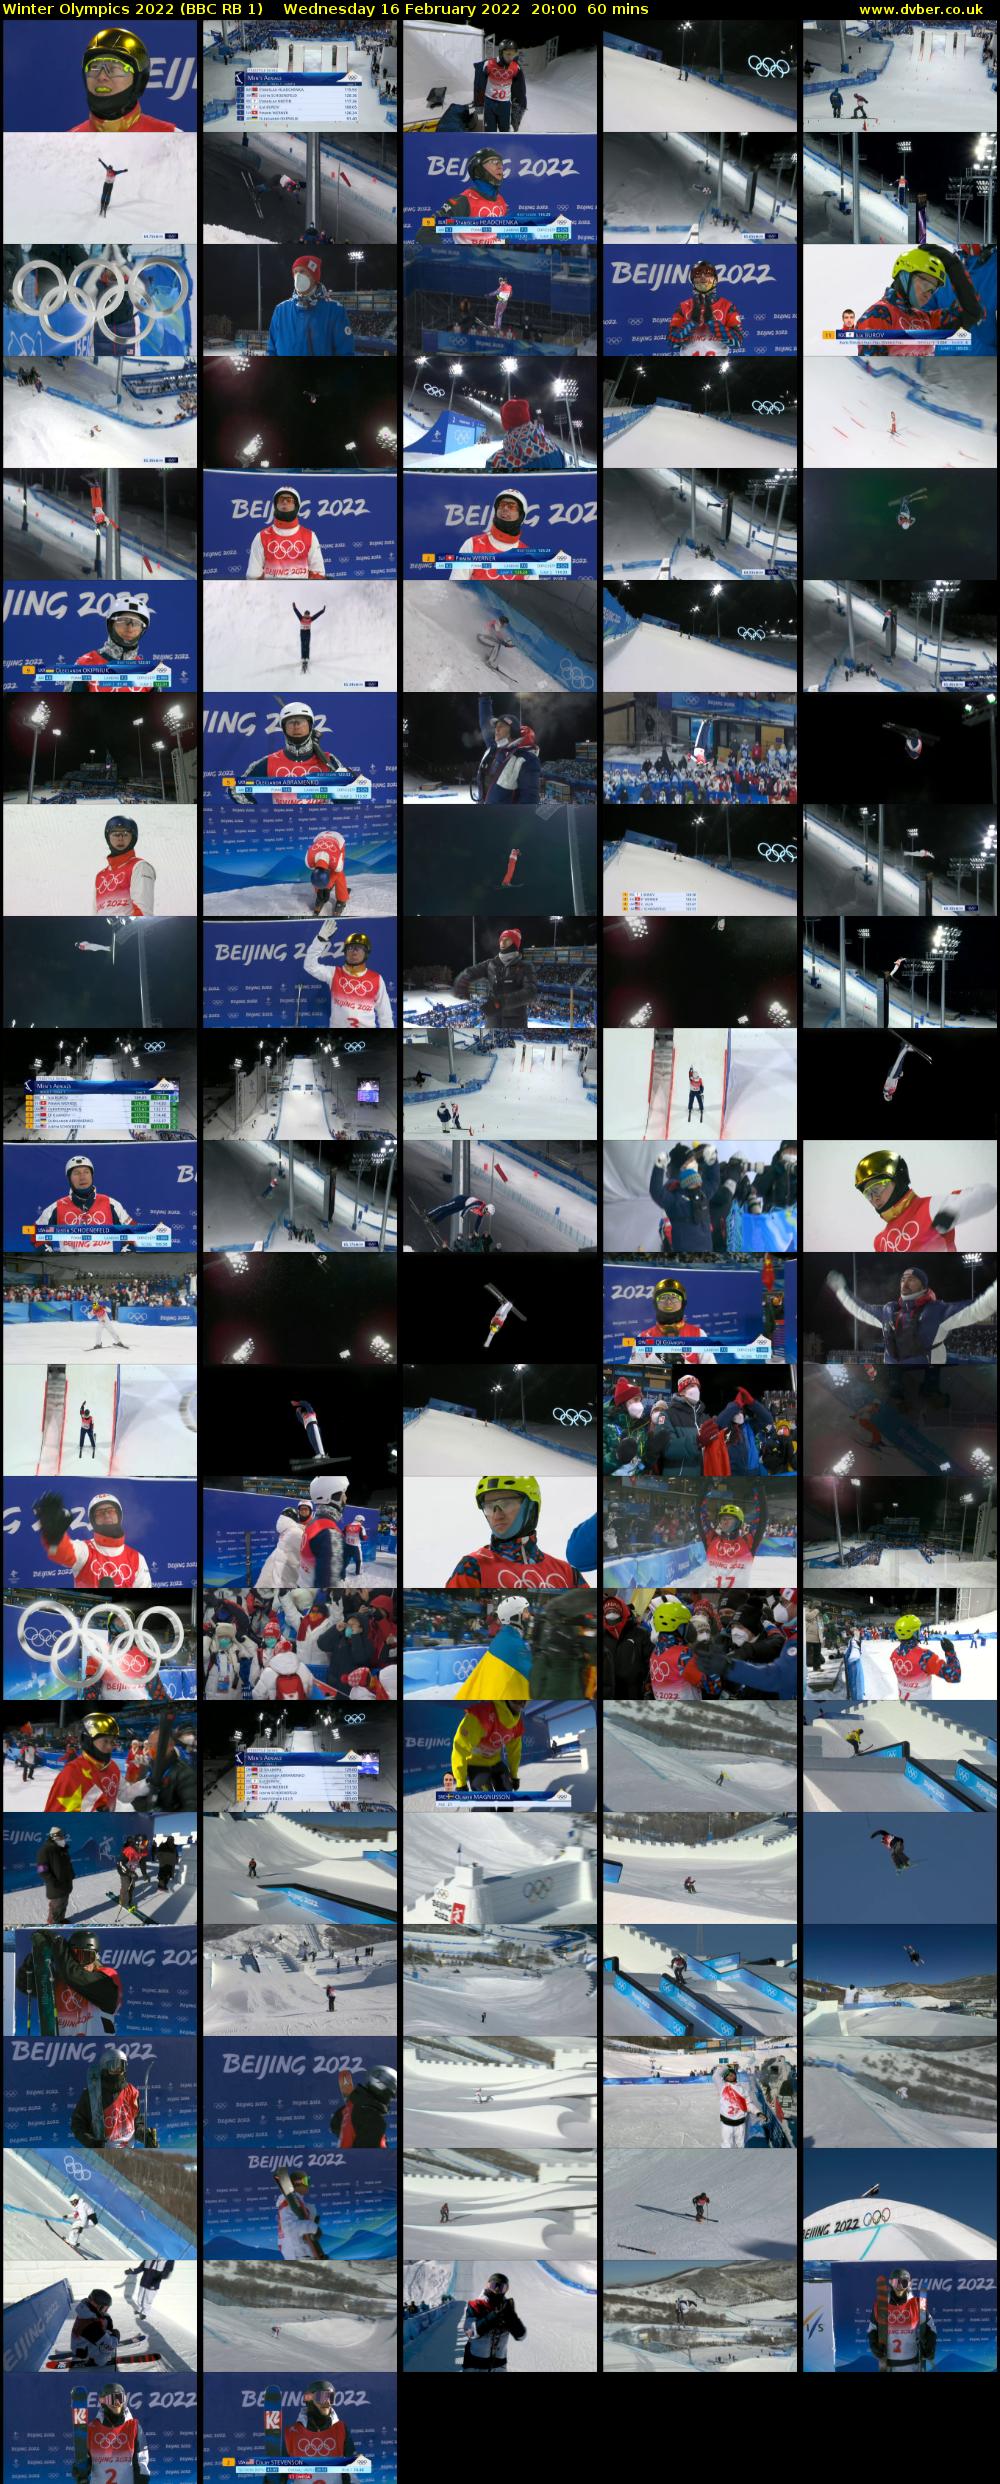 Winter Olympics 2022 (BBC RB 1) Wednesday 16 February 2022 20:00 - 21:00